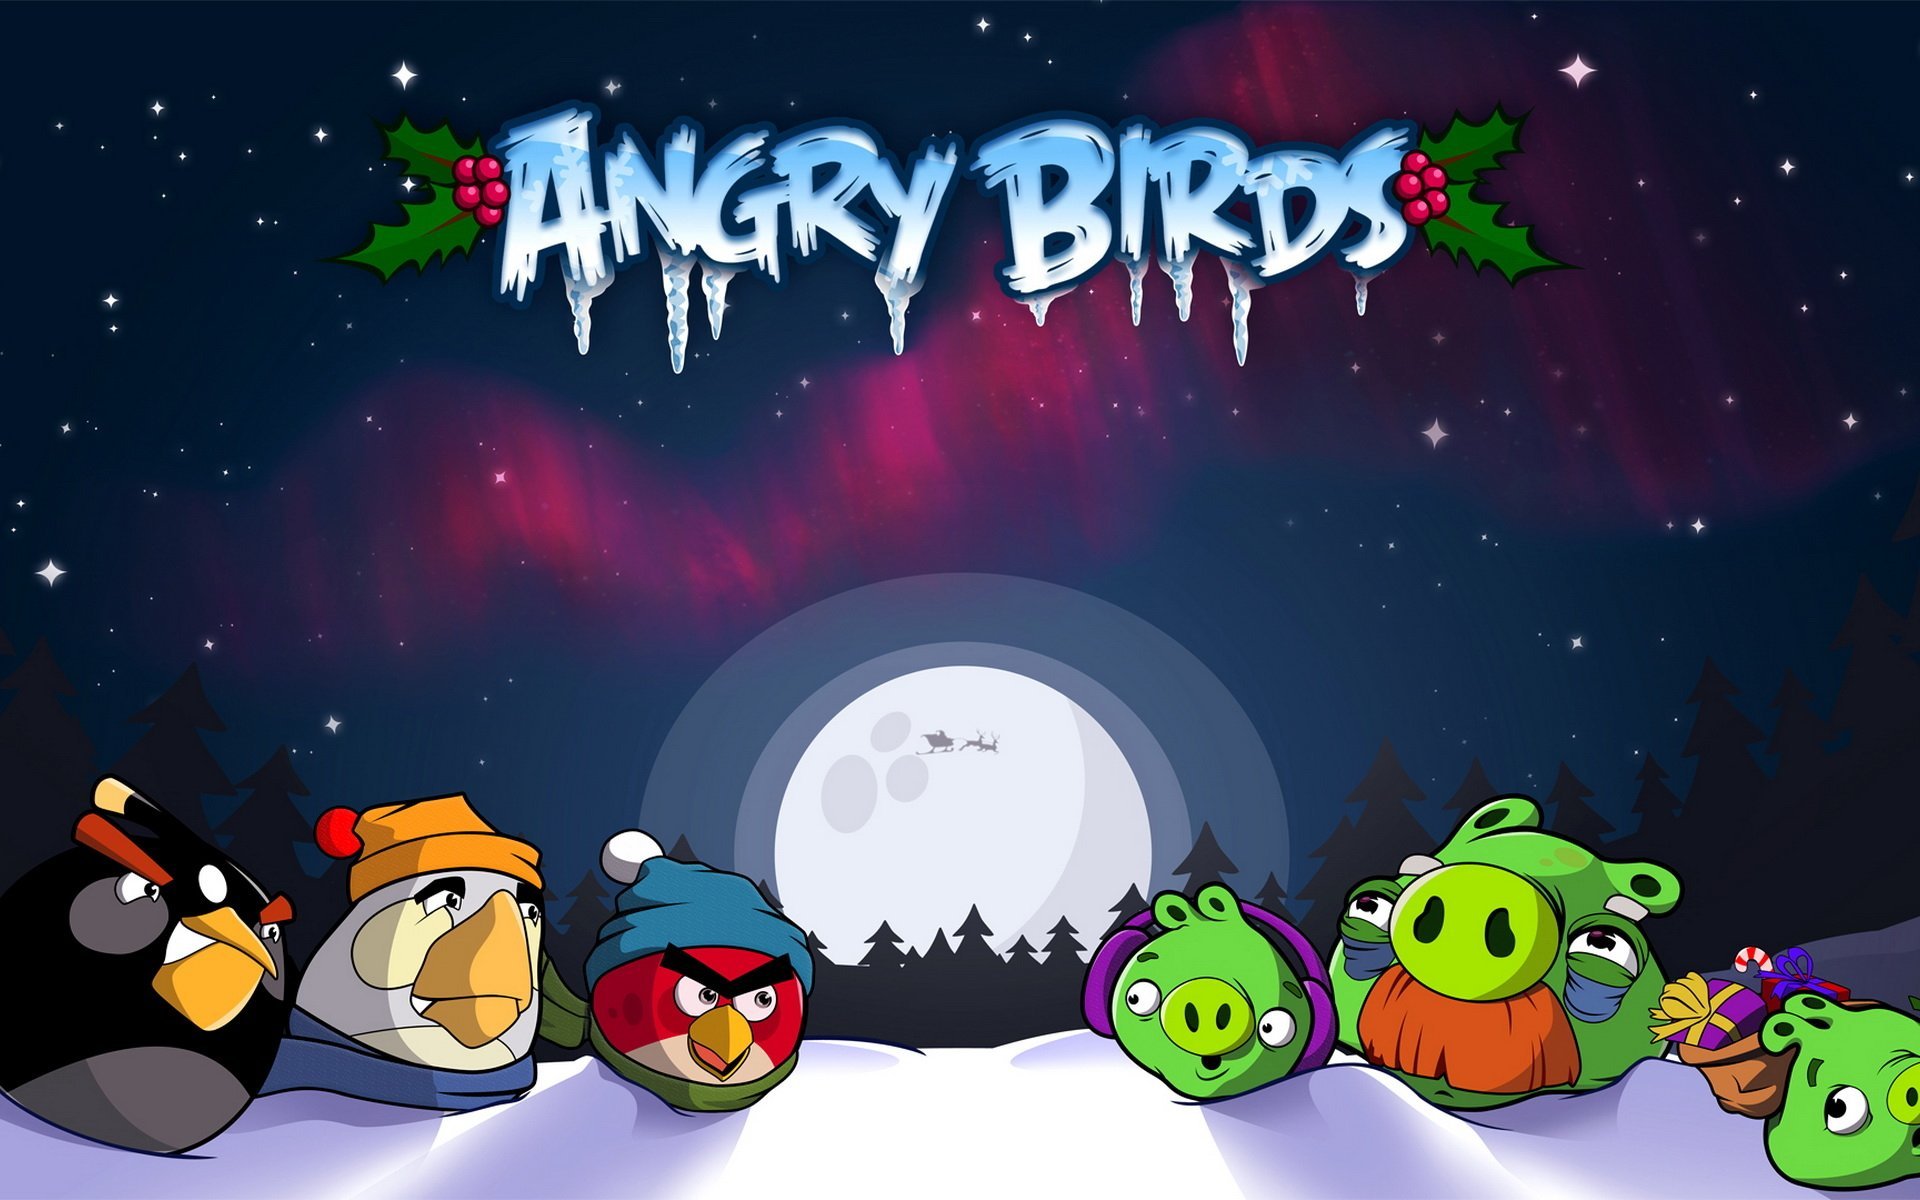 Игра енгрибердс. Энгри бёрдз злые птички. Энгри бердз Сизонс. Игра Angry Birds Seasons. Игра Angry Birds Seasons South America.